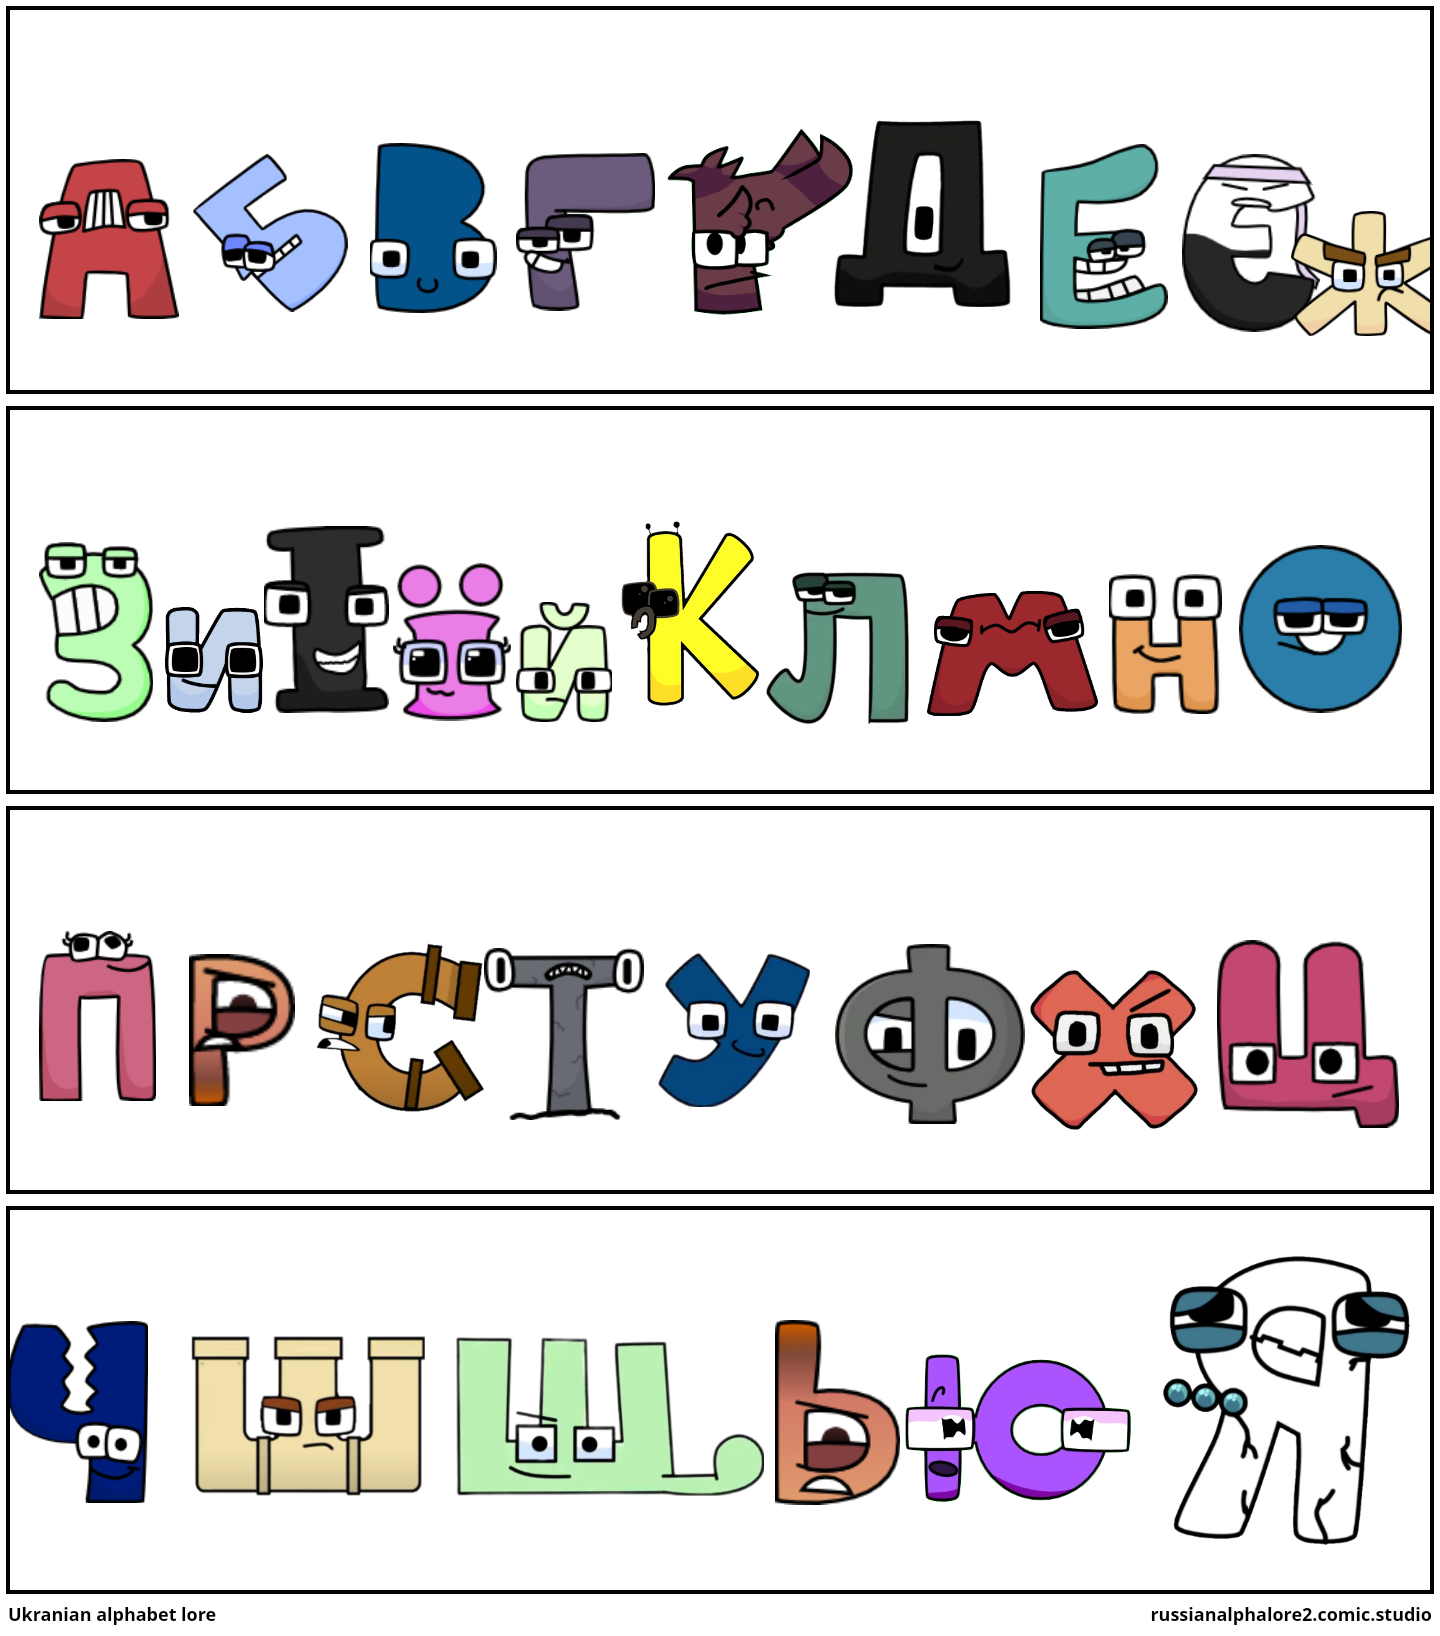 Ukranian alphabet lore